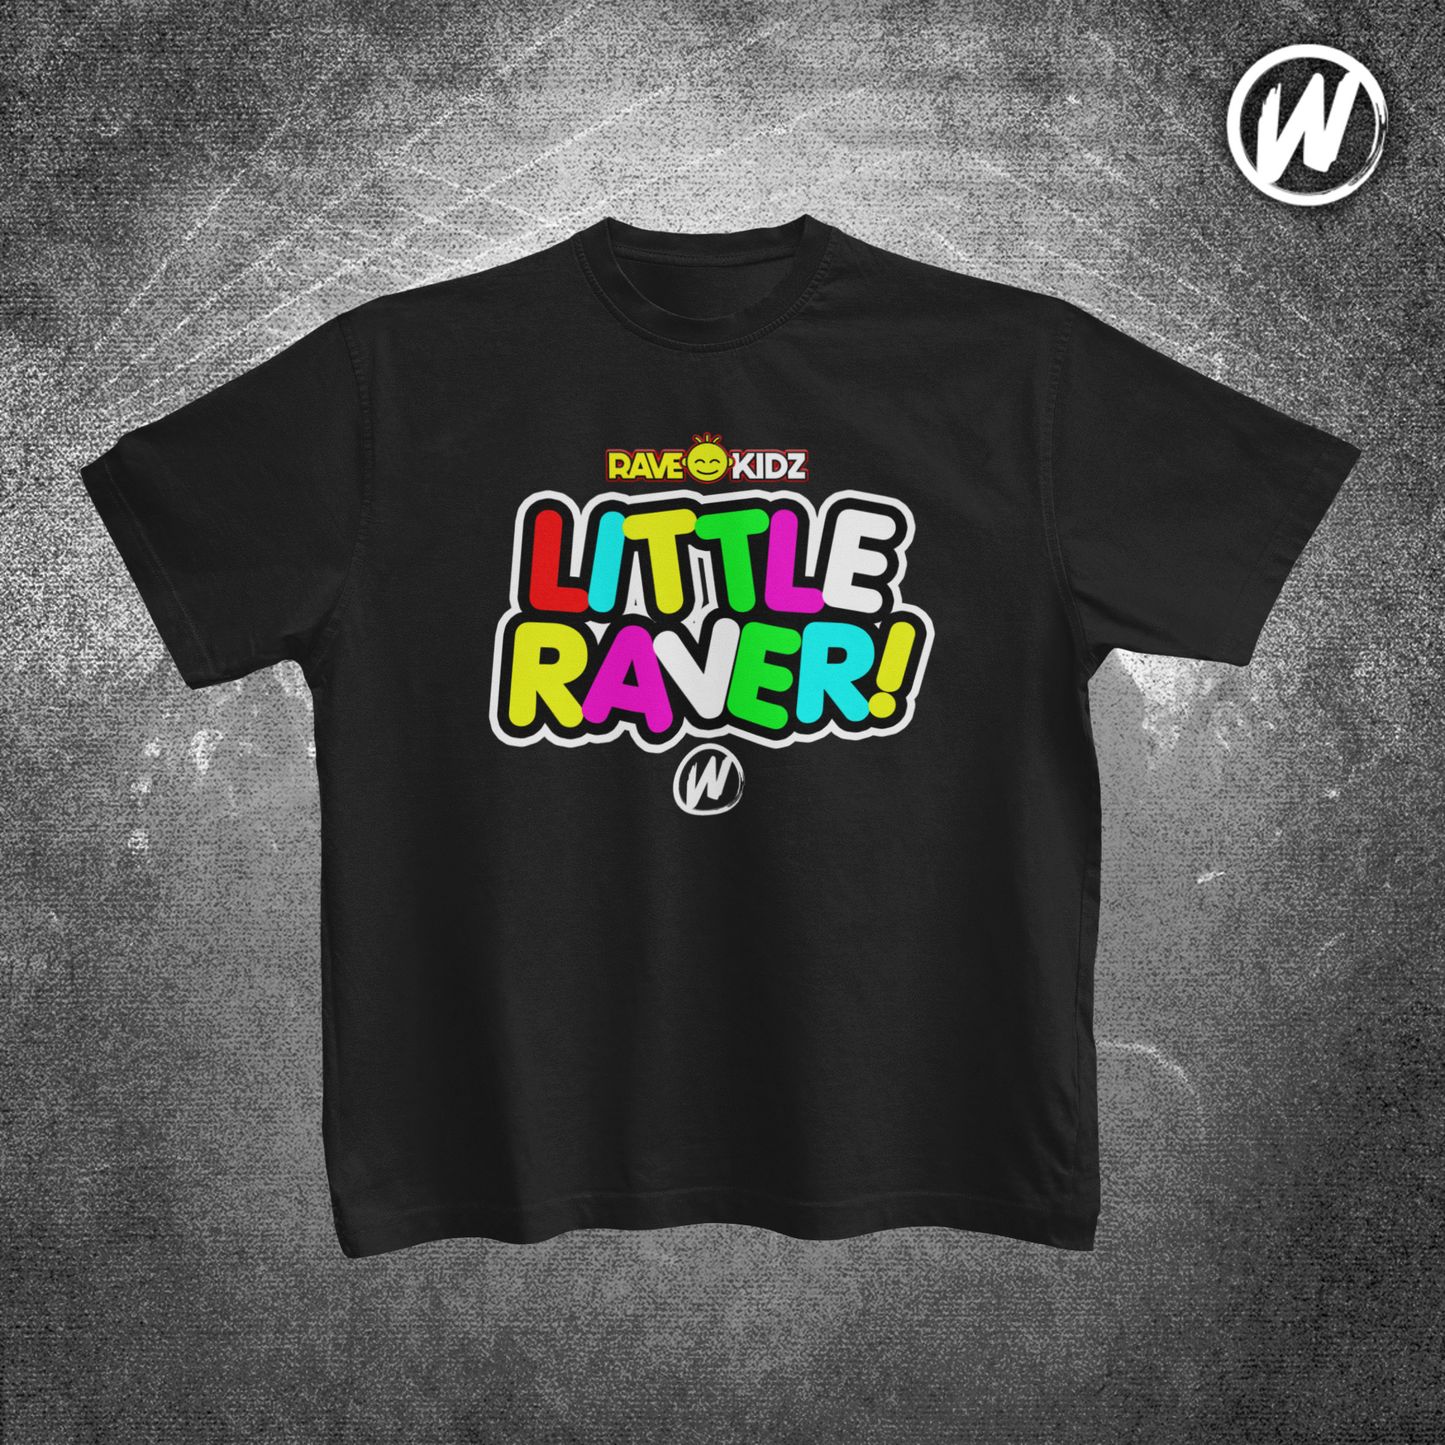 Rave Kidz - Little Raver - T-shirt (Black)